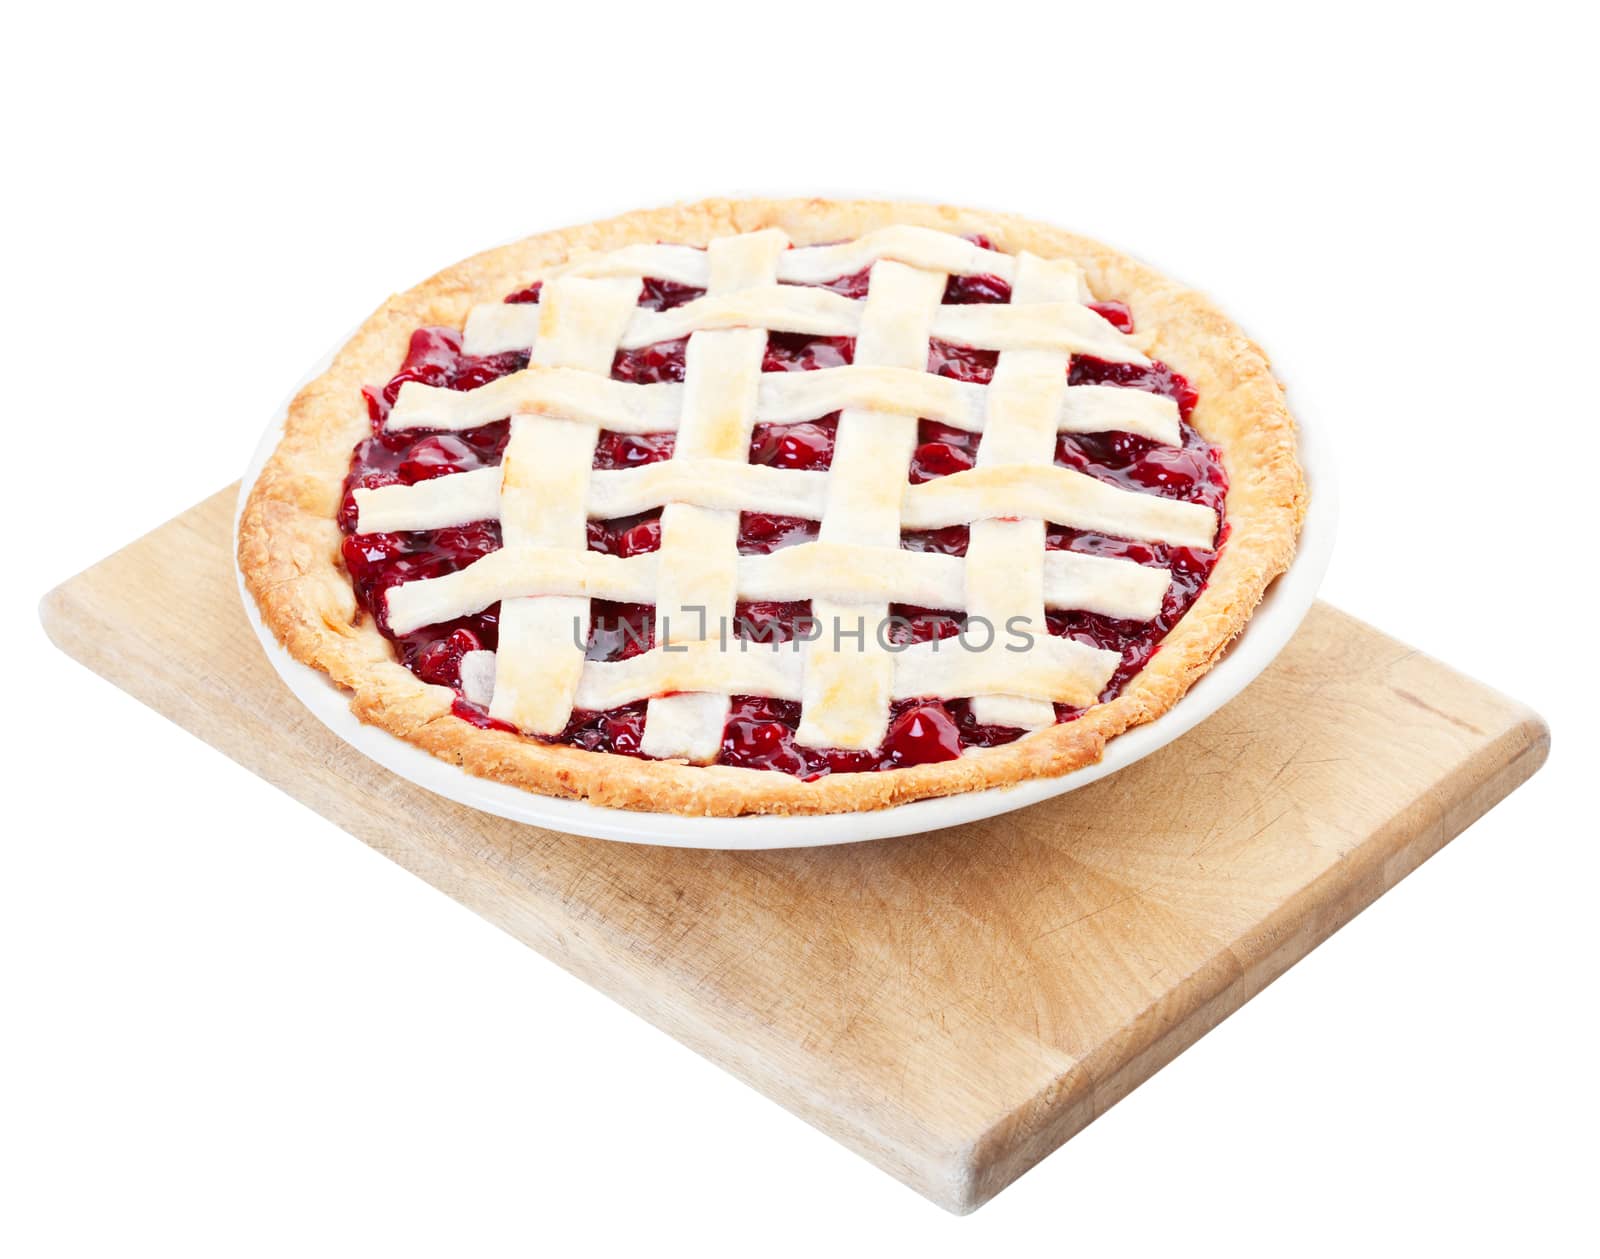 Homemade Cherry Pie by songbird839